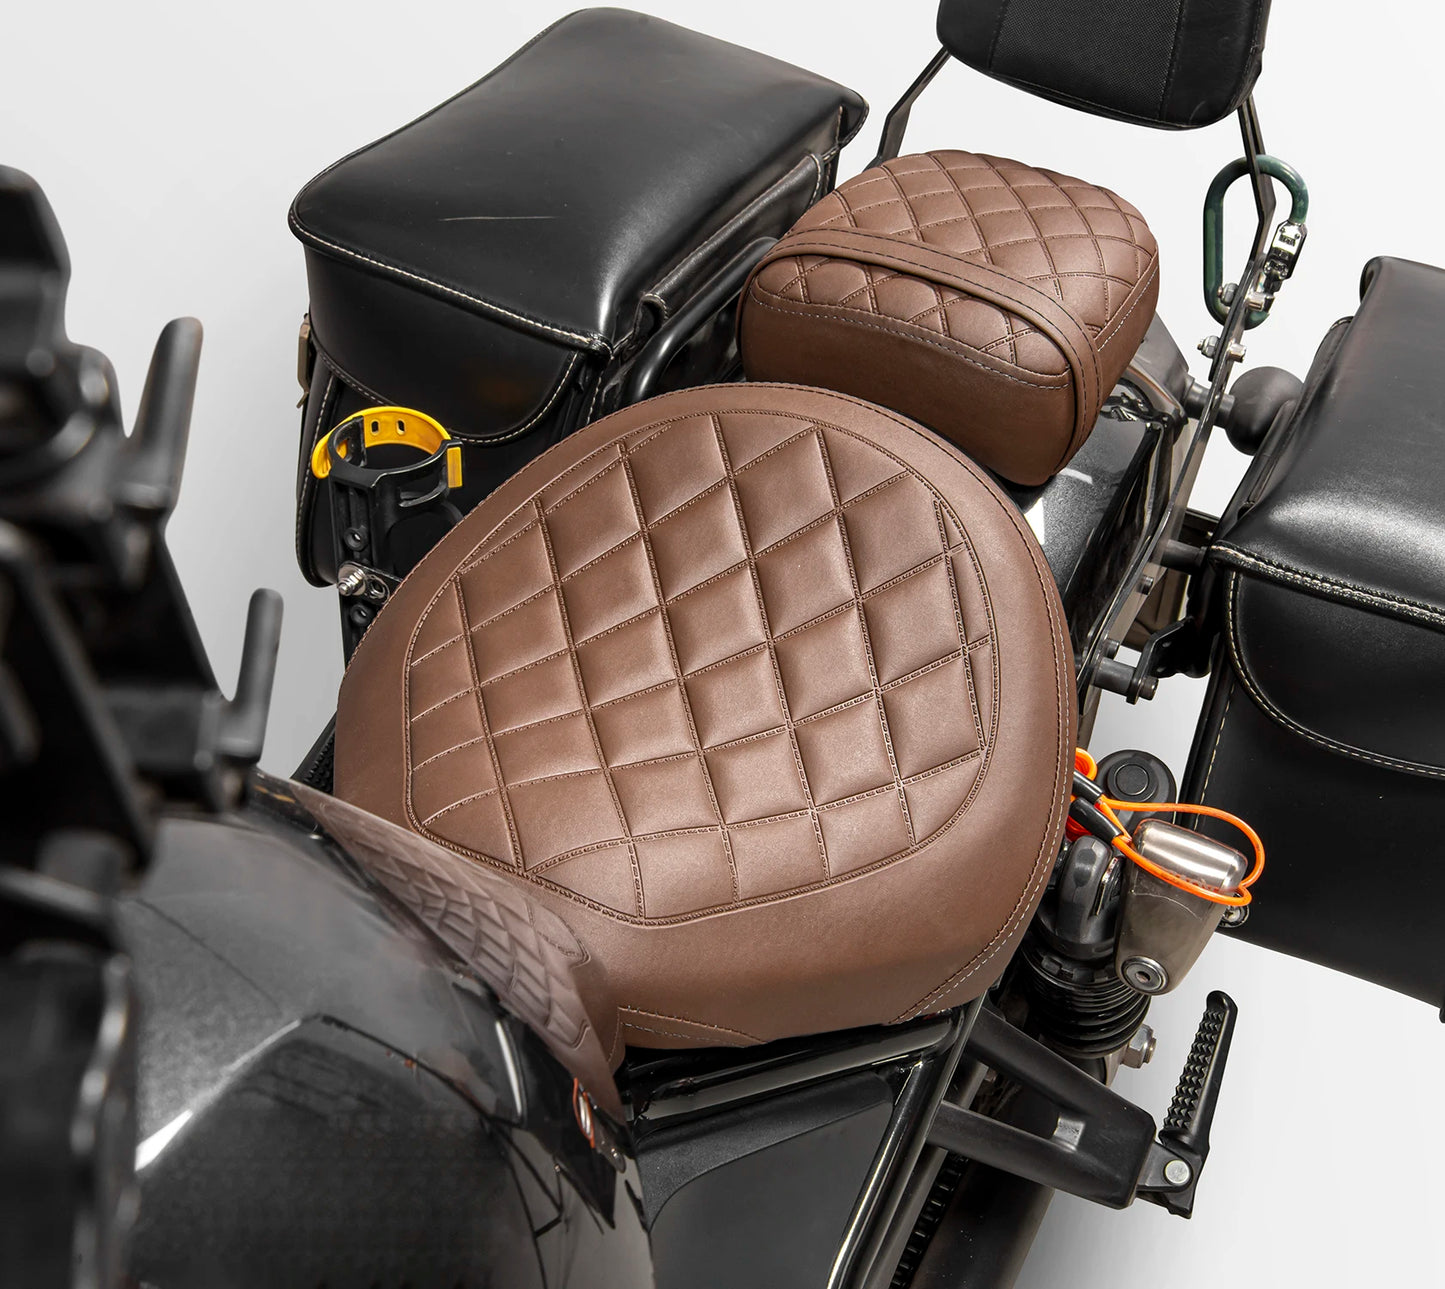 CM CMX 1100 Front Rear Pillion Passenger Pad Seat For Honda Rebel CM1100 CMX1100 2021-2024 2023 Motorcycle Driver Cushion Cover